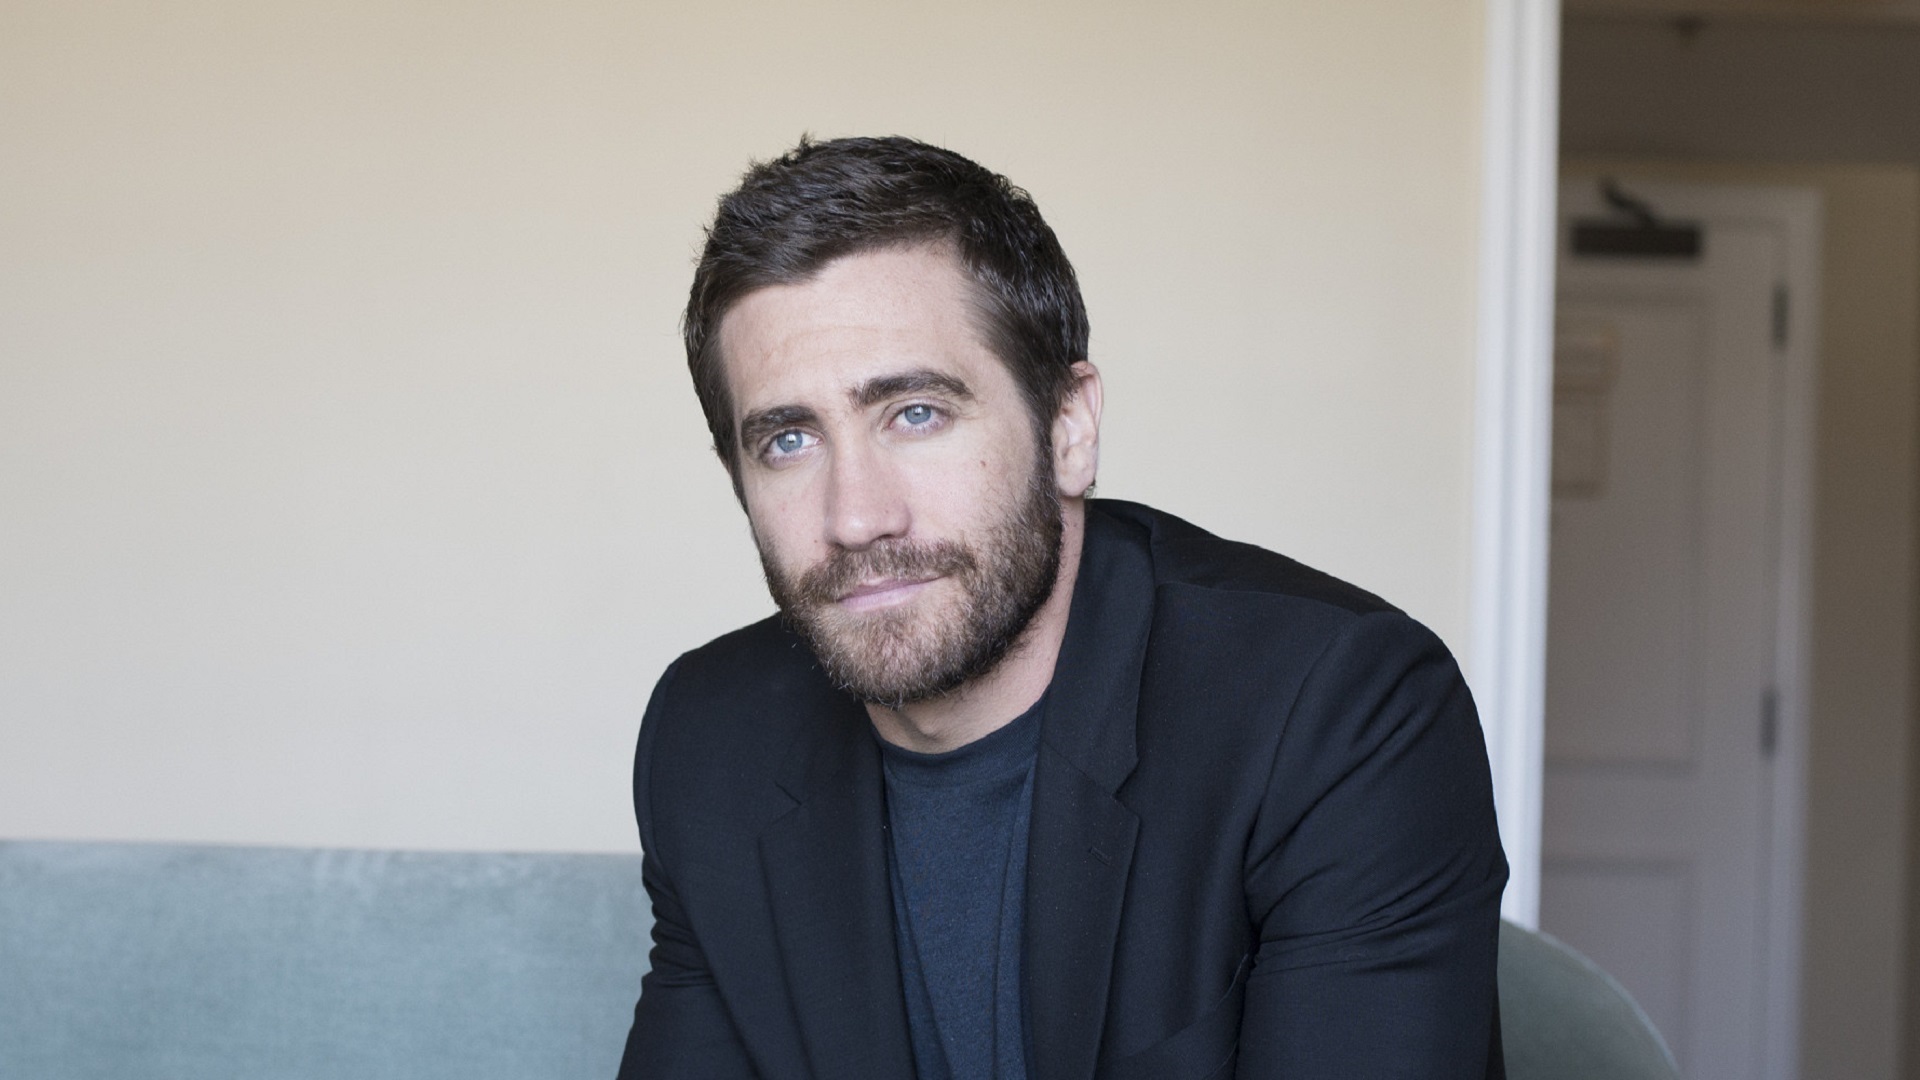 Descarga gratuita de fondo de pantalla para móvil de Jake Gyllenhaal, Celebridades, Actor.